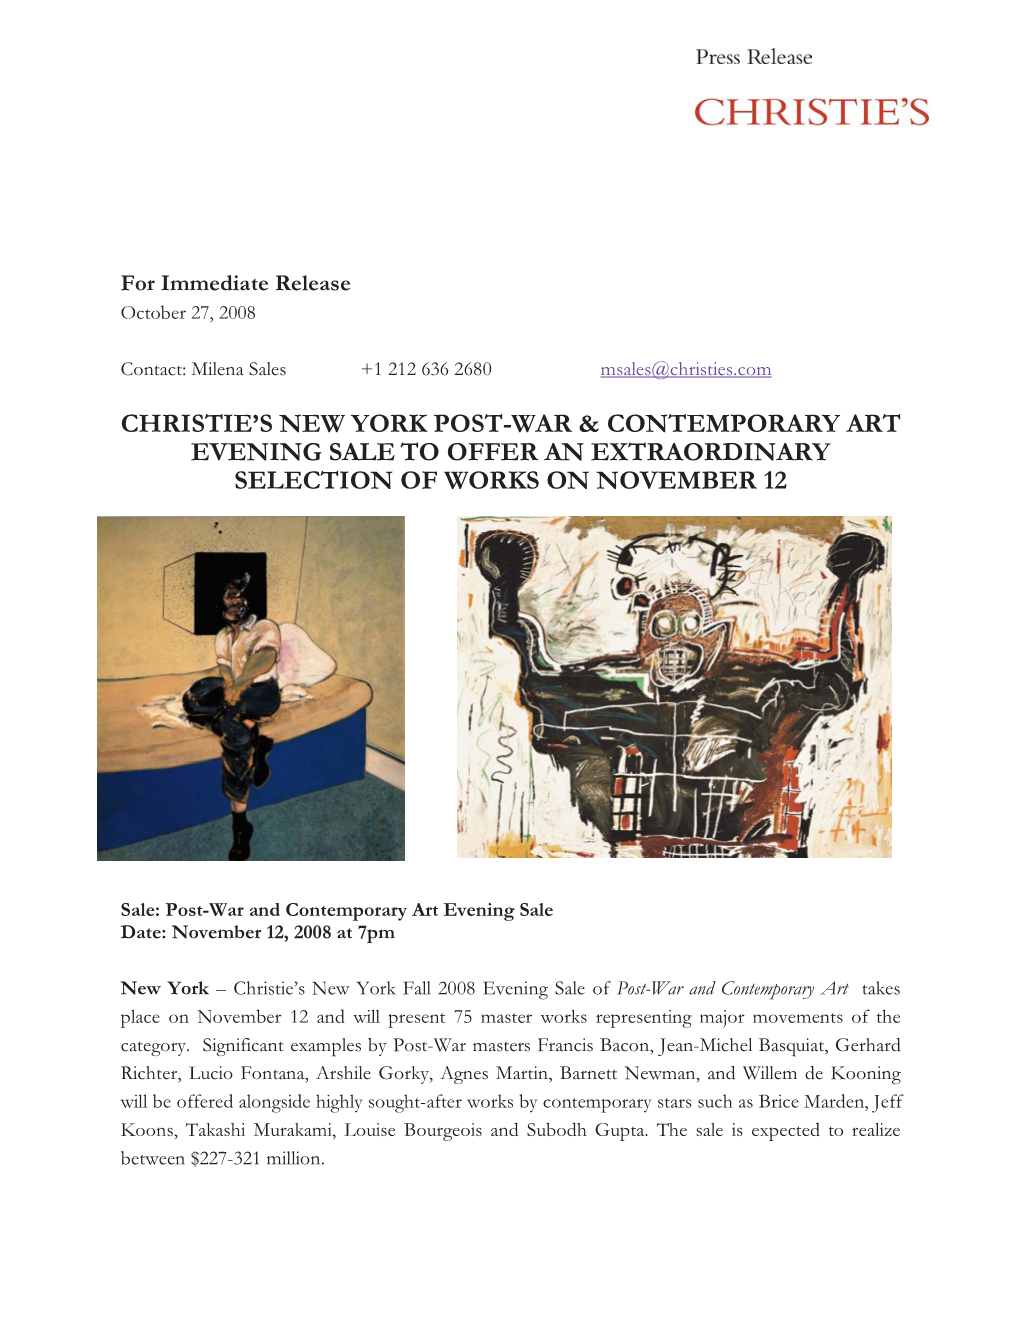 Christie's New York Post-War & Contemporary Art